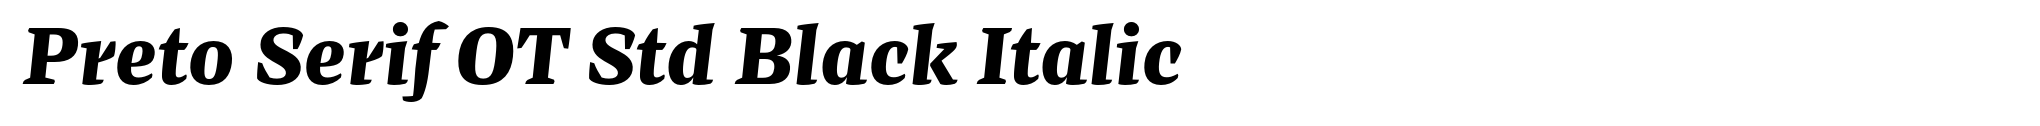 Preto Serif OT Std Black Italic image